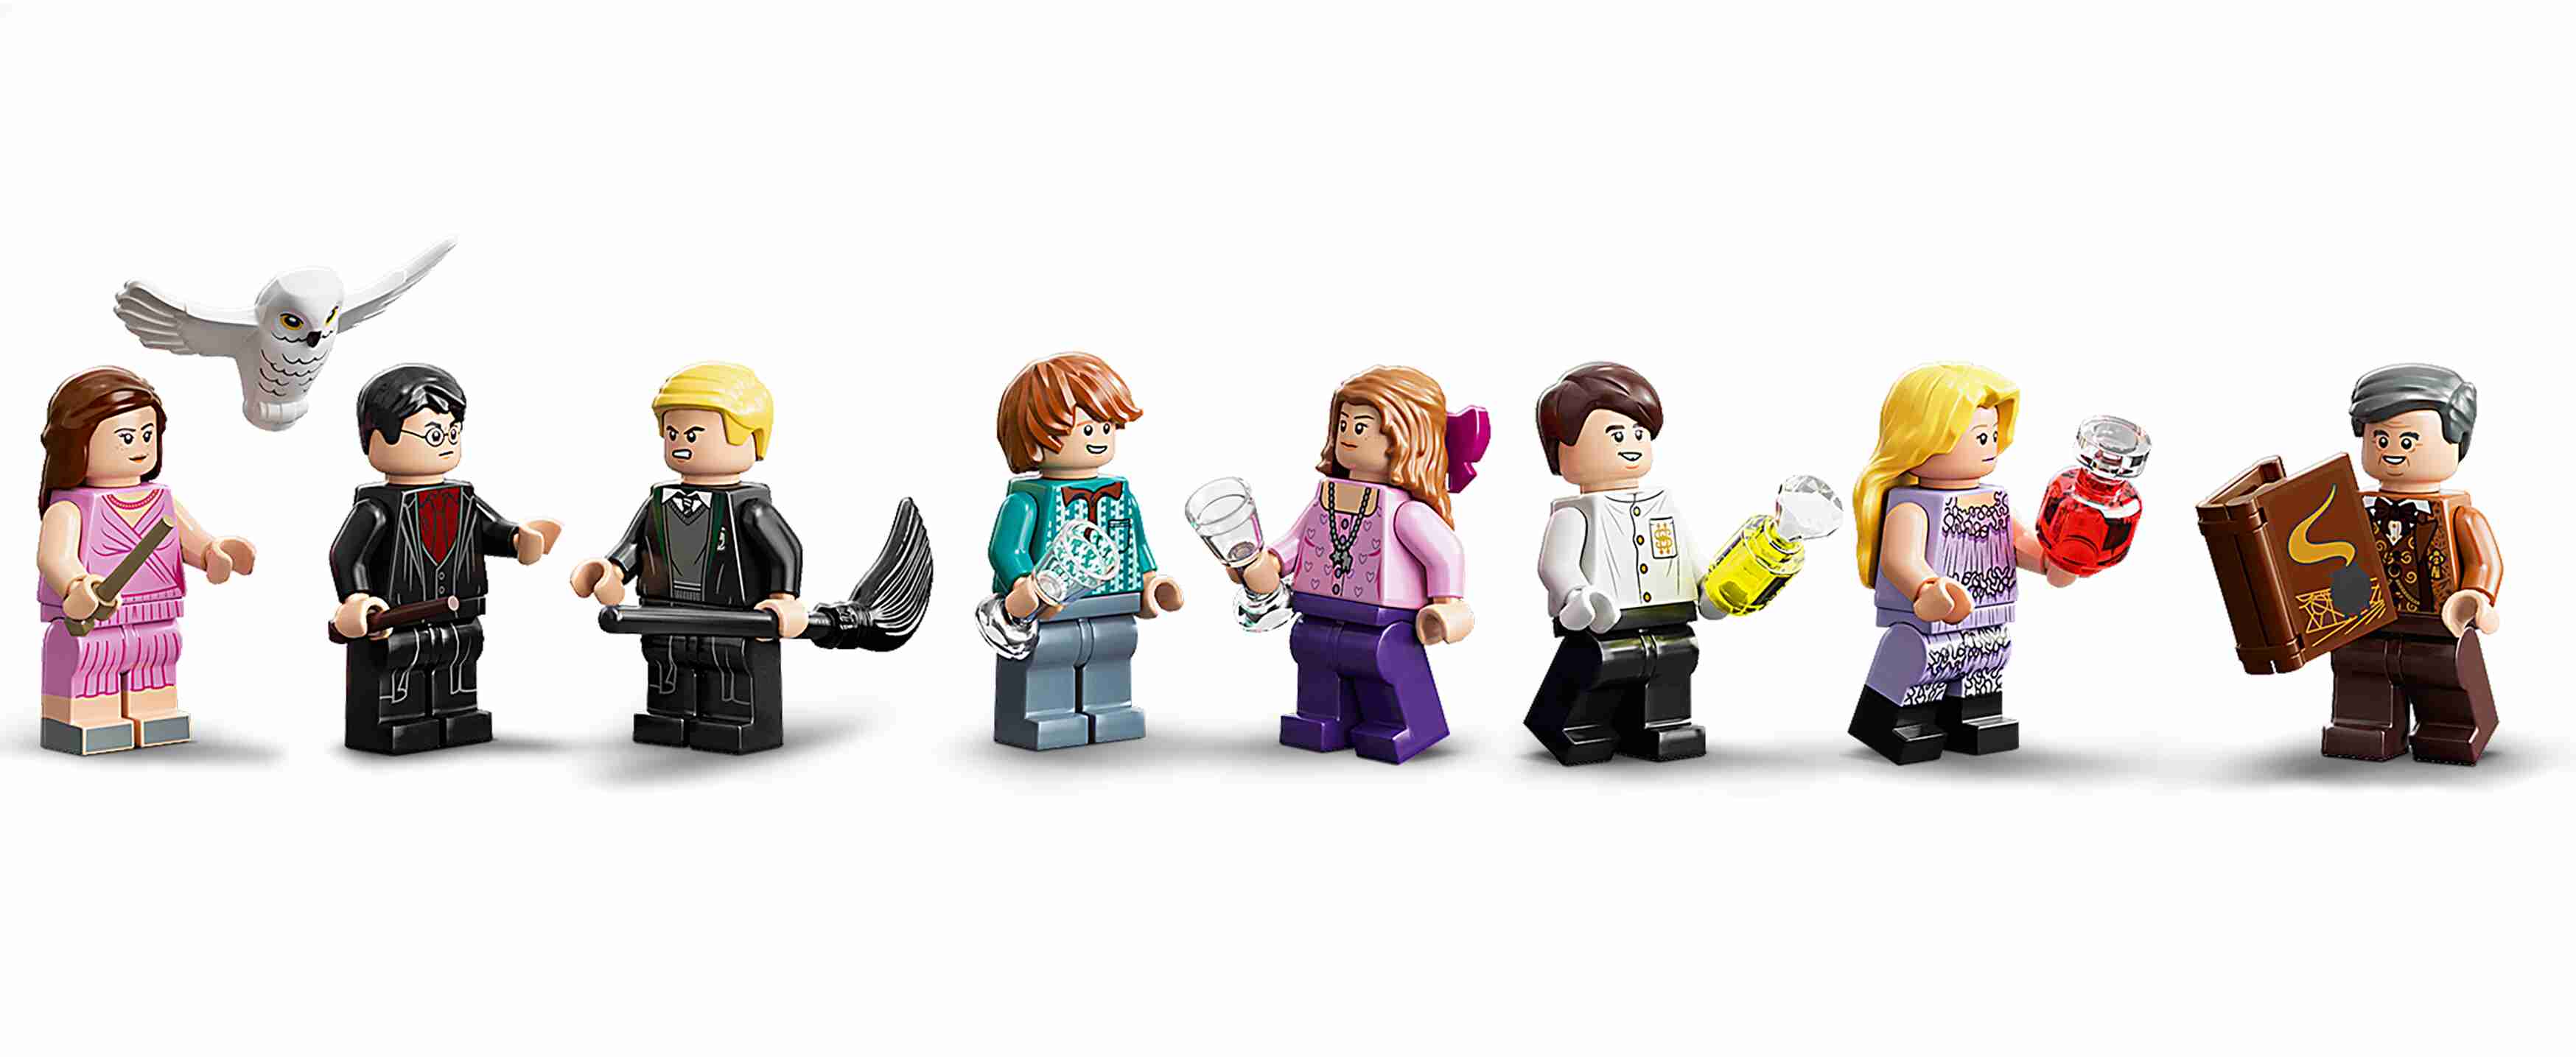 LEGO 75969 Harry Potter Hogwarts Astronomie Tower mit 8 Minifiguren